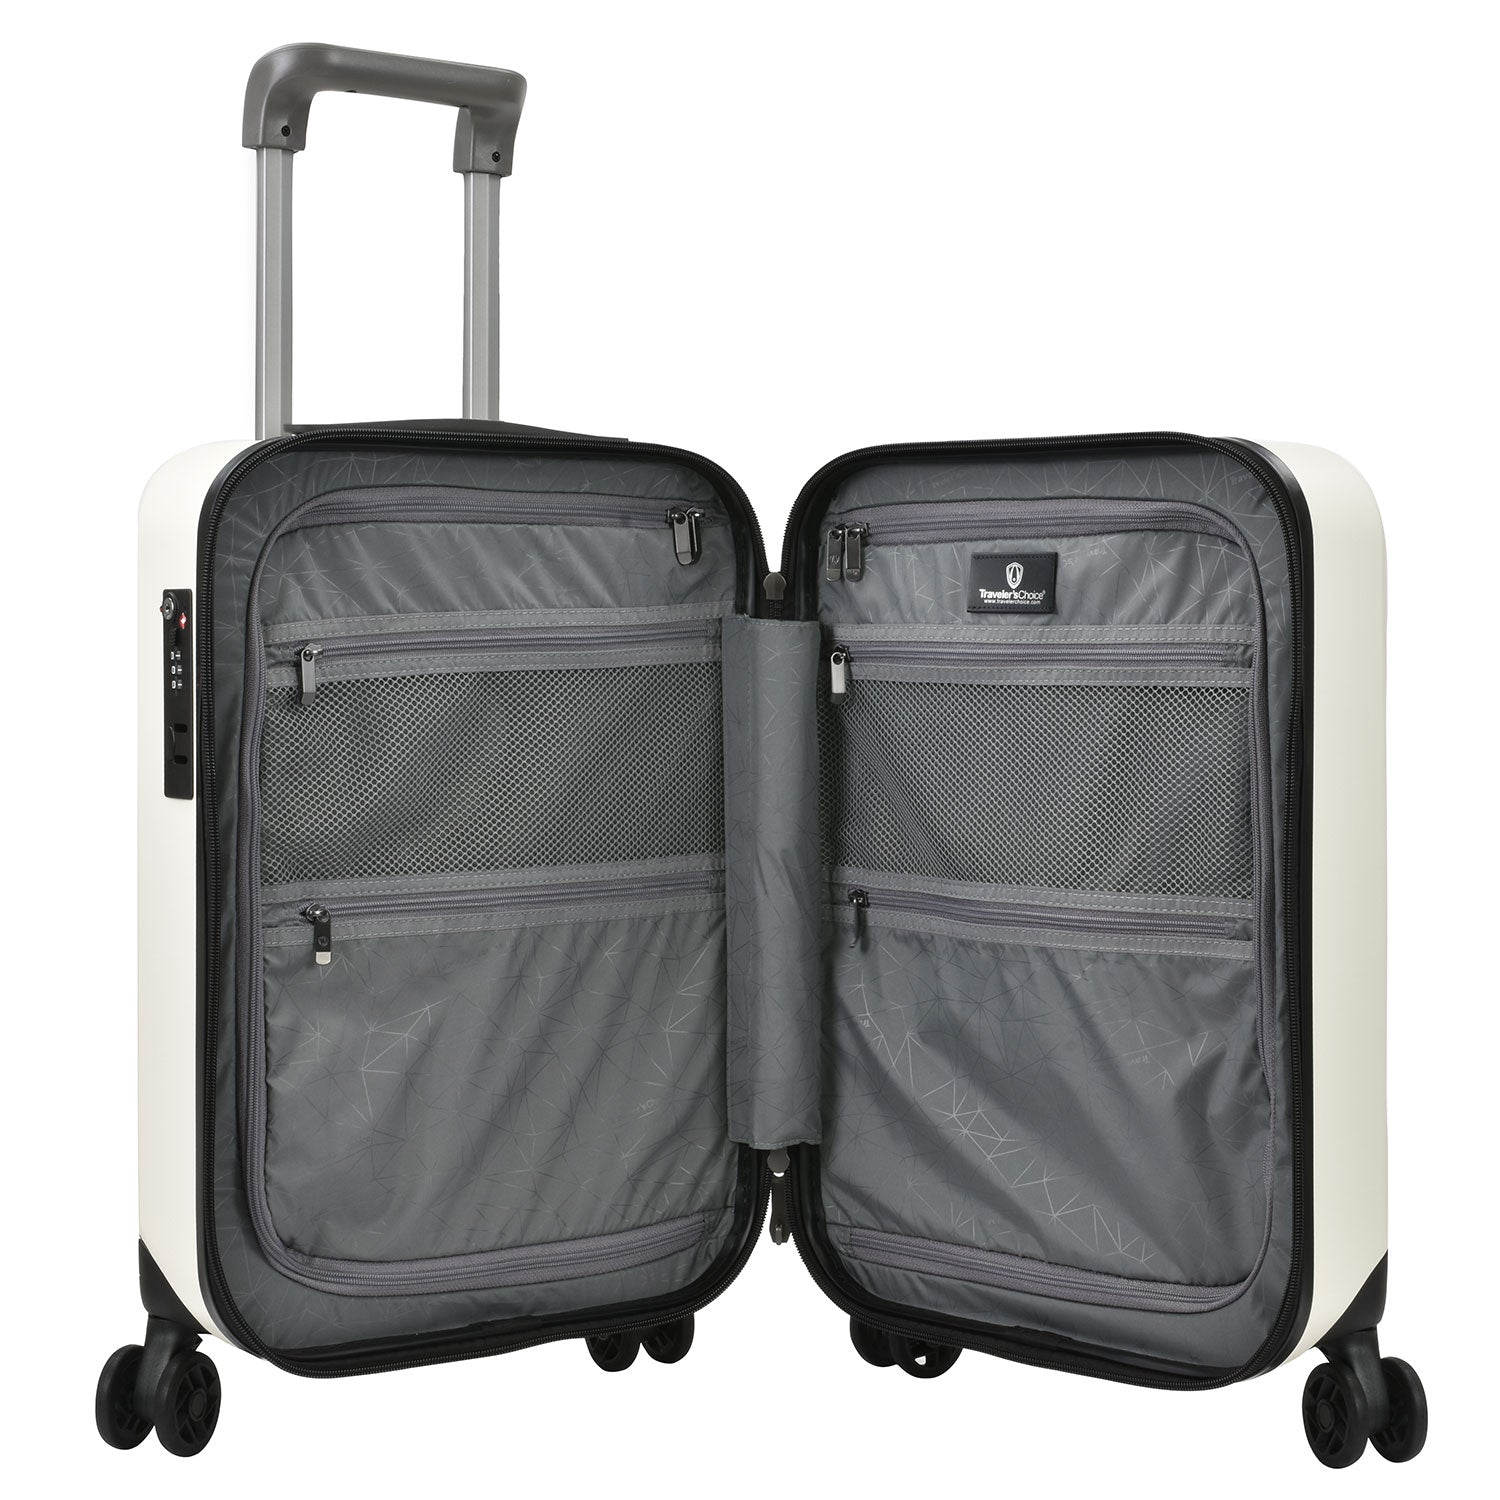 Skyee 2-Piece Hard Shell Spinner Luggage Set